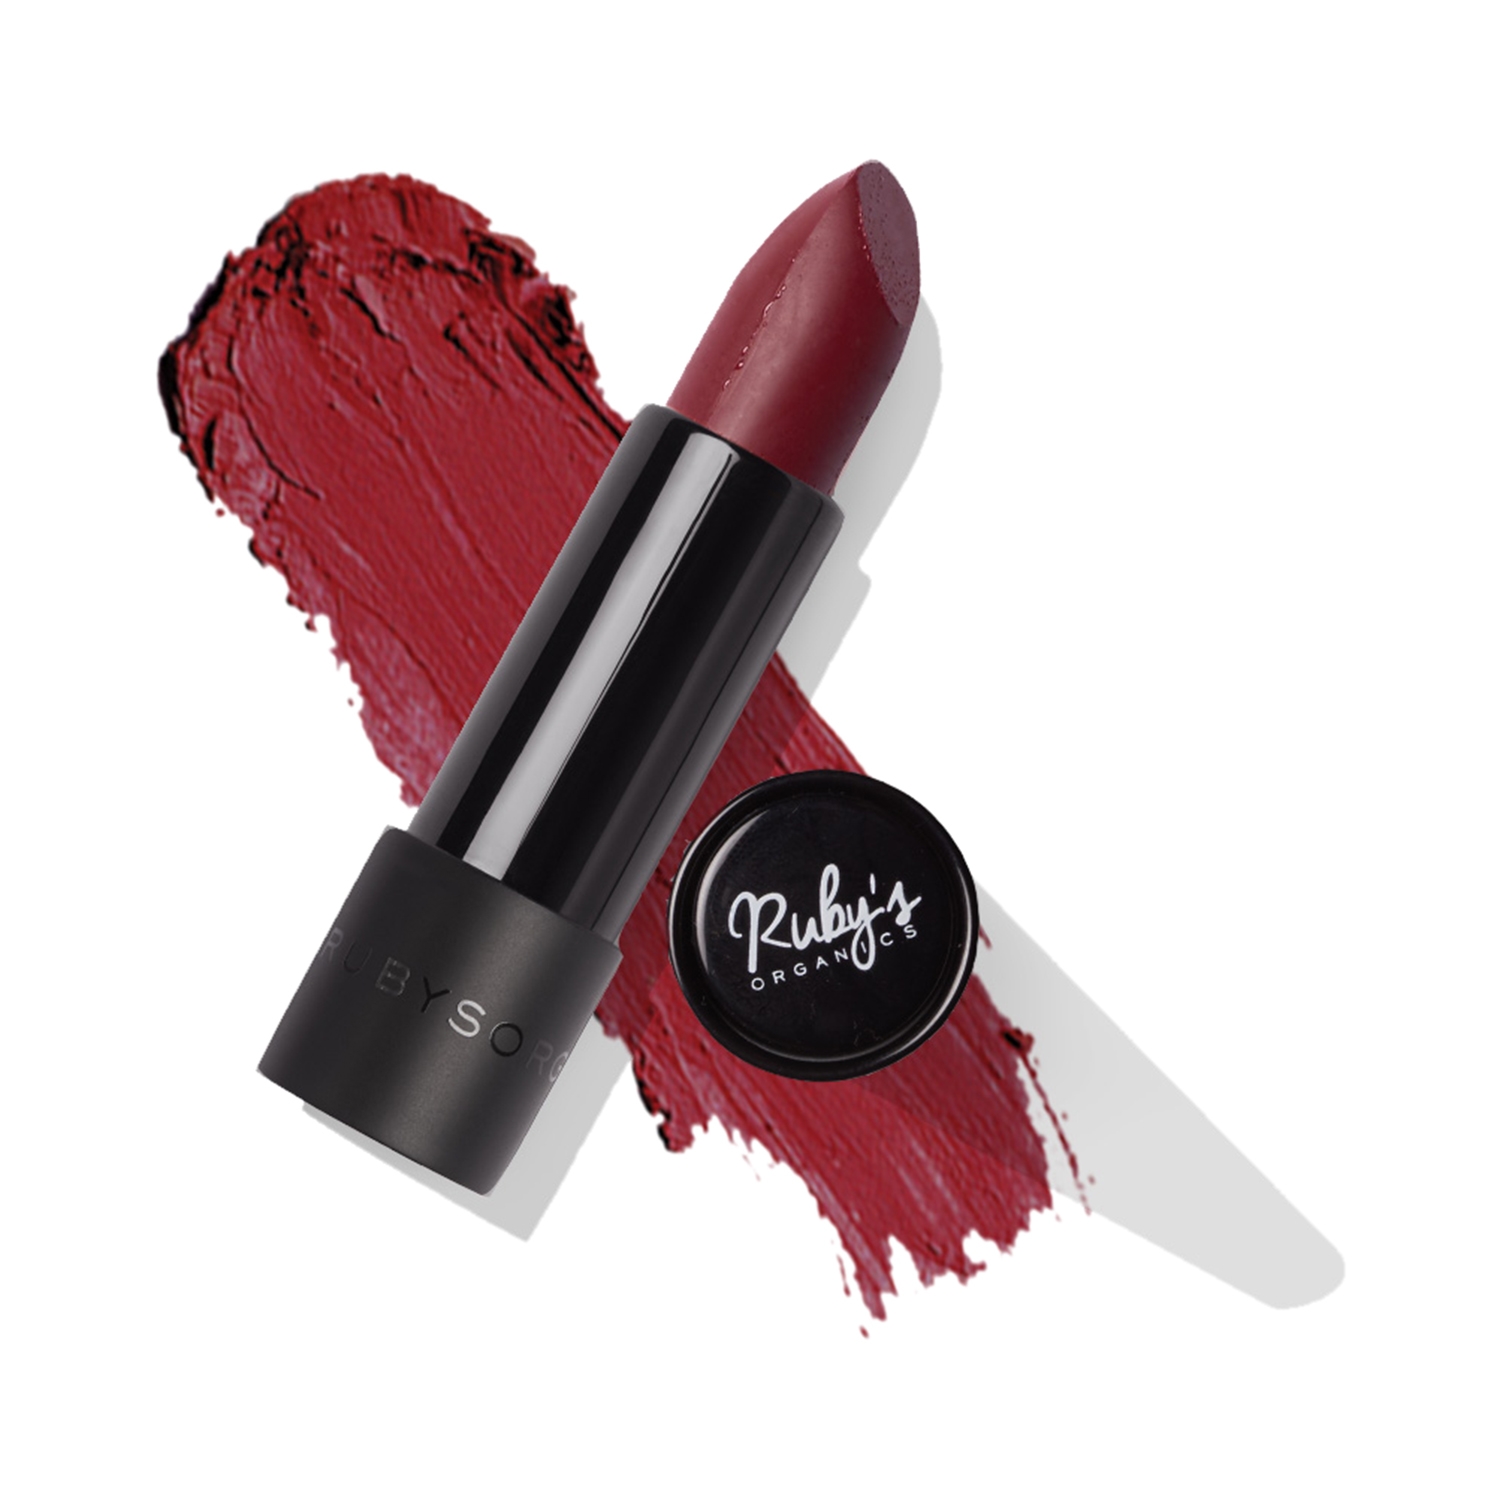 Ruby's Organics | Ruby's Organics Lipstick - Burgundy (3.7g)